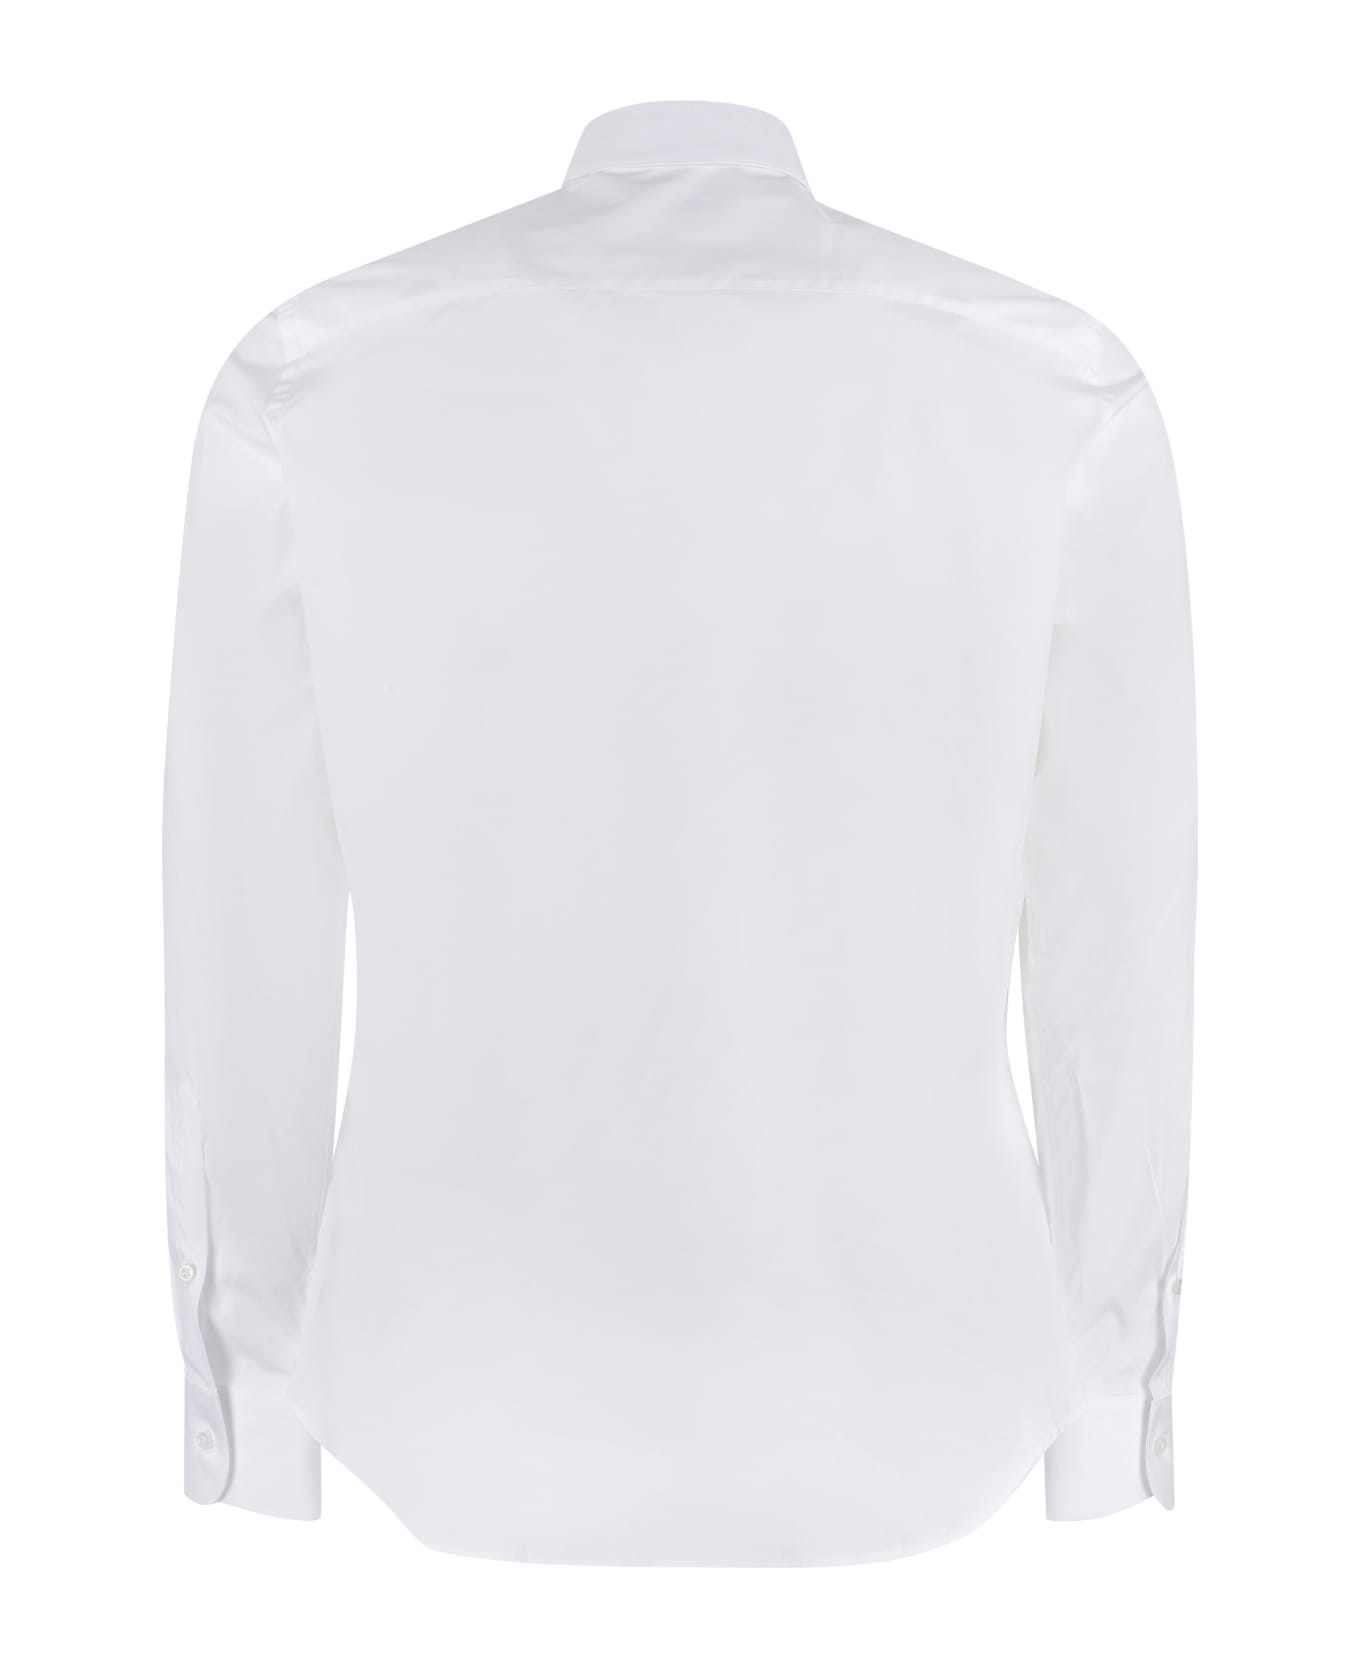 Sonrisa Long Sleeve Stretch Cotton Shirt - White